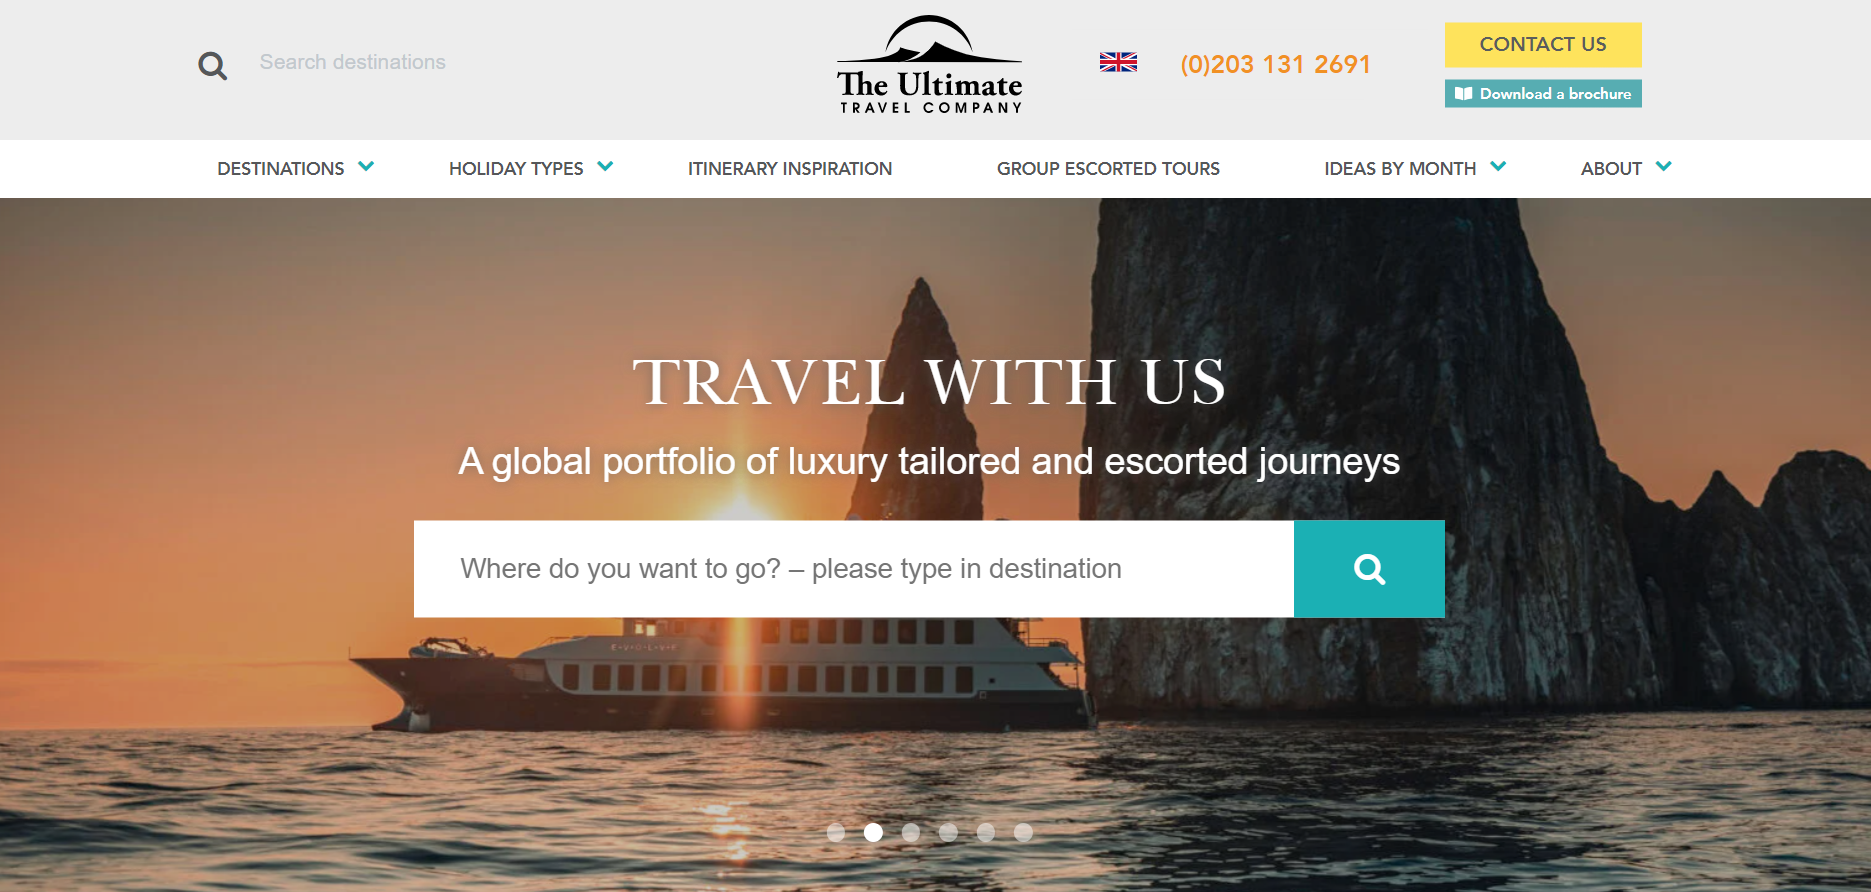 The Ultimate Travel Company Ltd